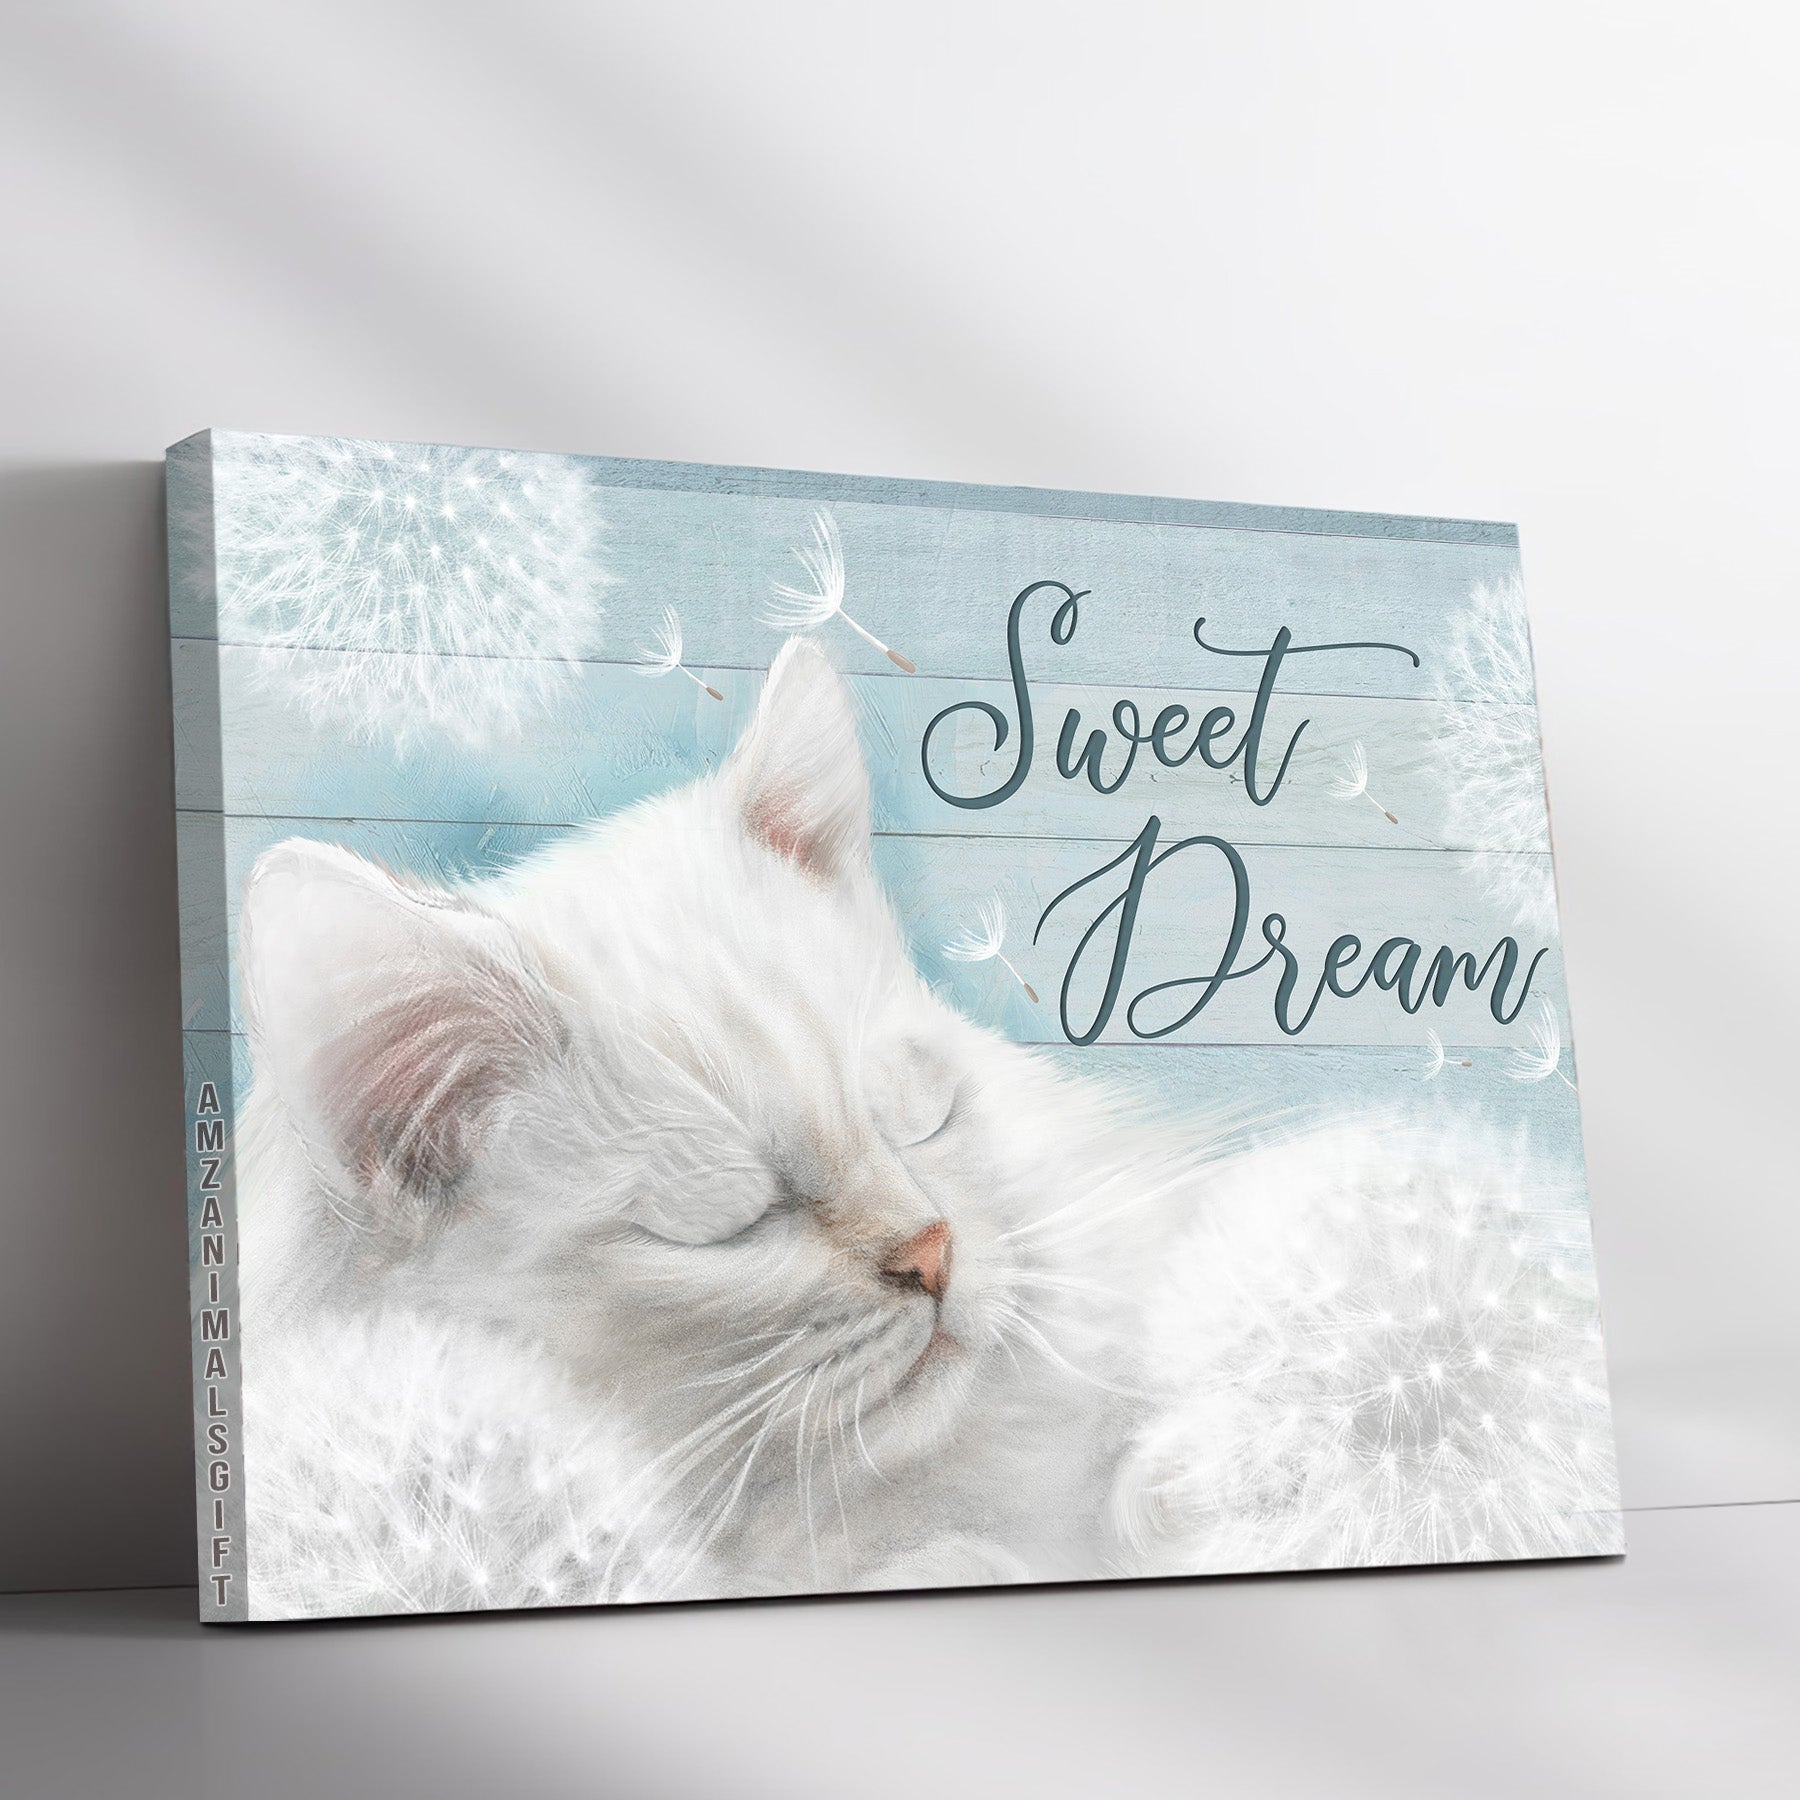 White Cat Landscape Canvas - Beautiful Dandelion, Cute white cat, Sweet dream - Jesus Landscape Canvas Prints, Christian - Gift For Cat Lovers, Christian